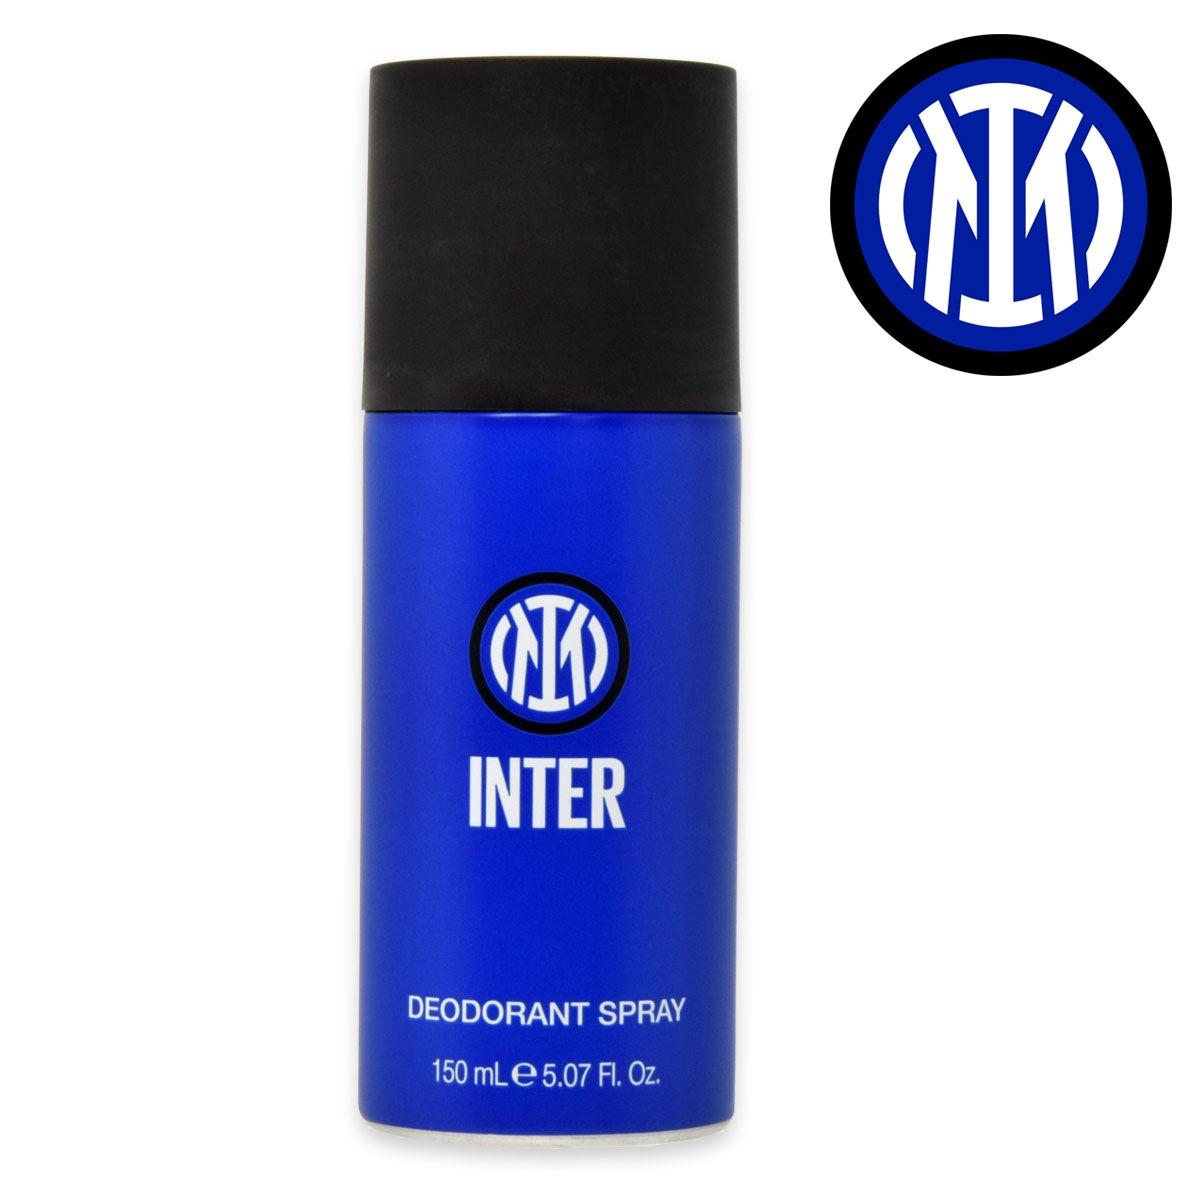 Inter deodorante spray 150 ml